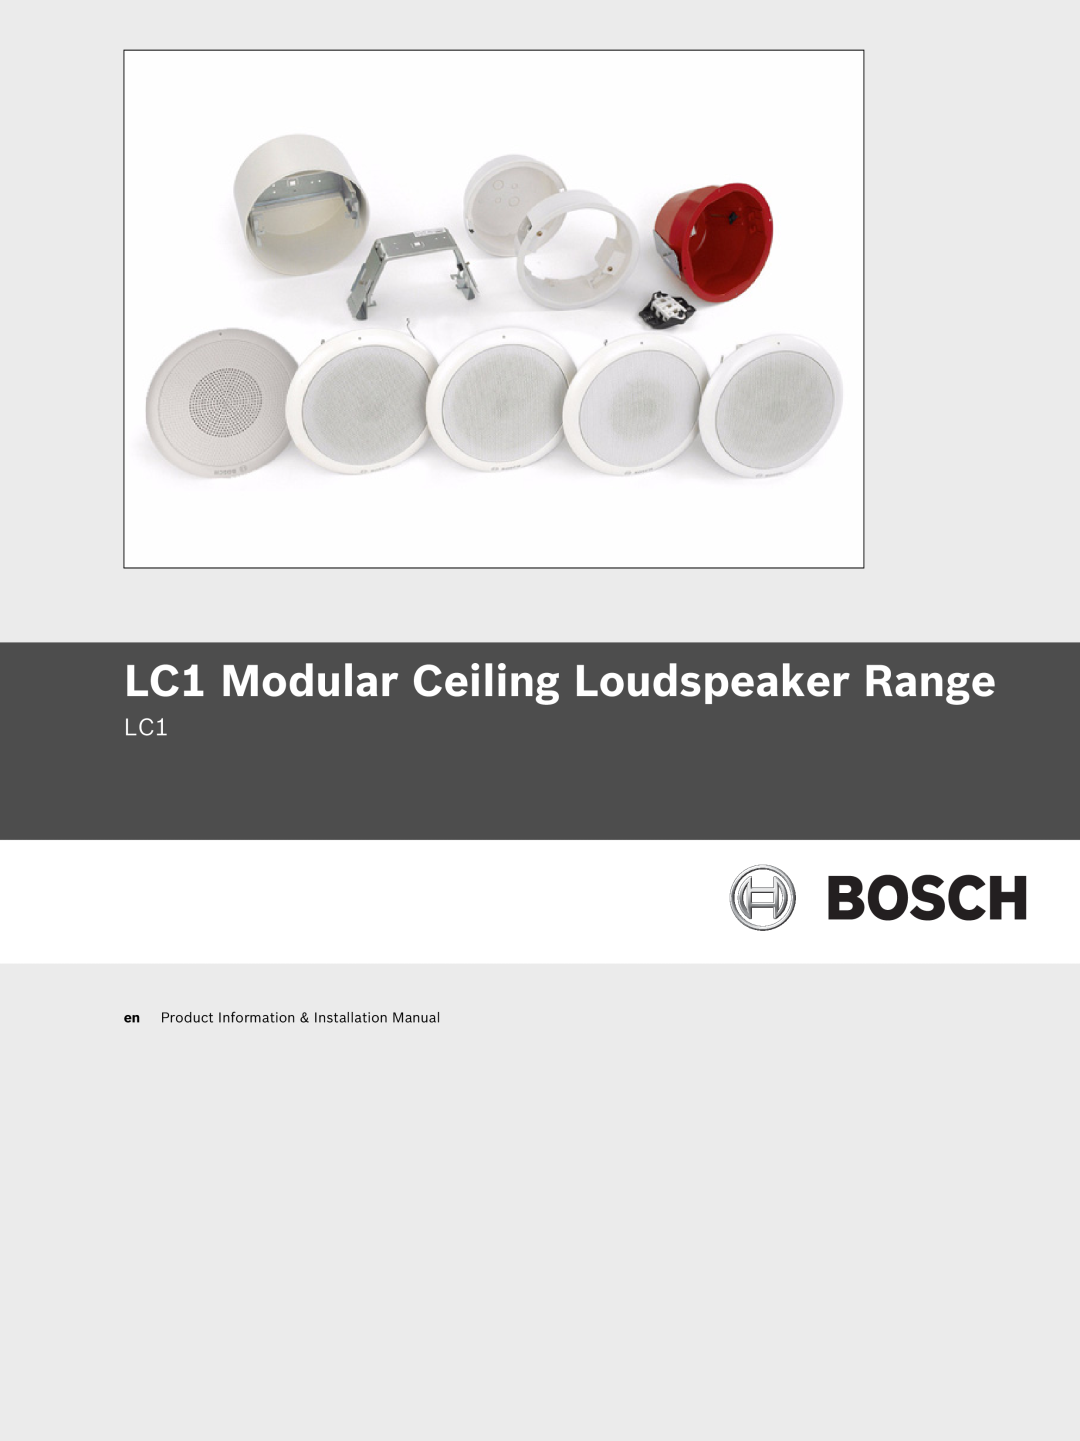 Bosch Appliances installation manual LC1 Modular Ceiling Loudspeaker Range 